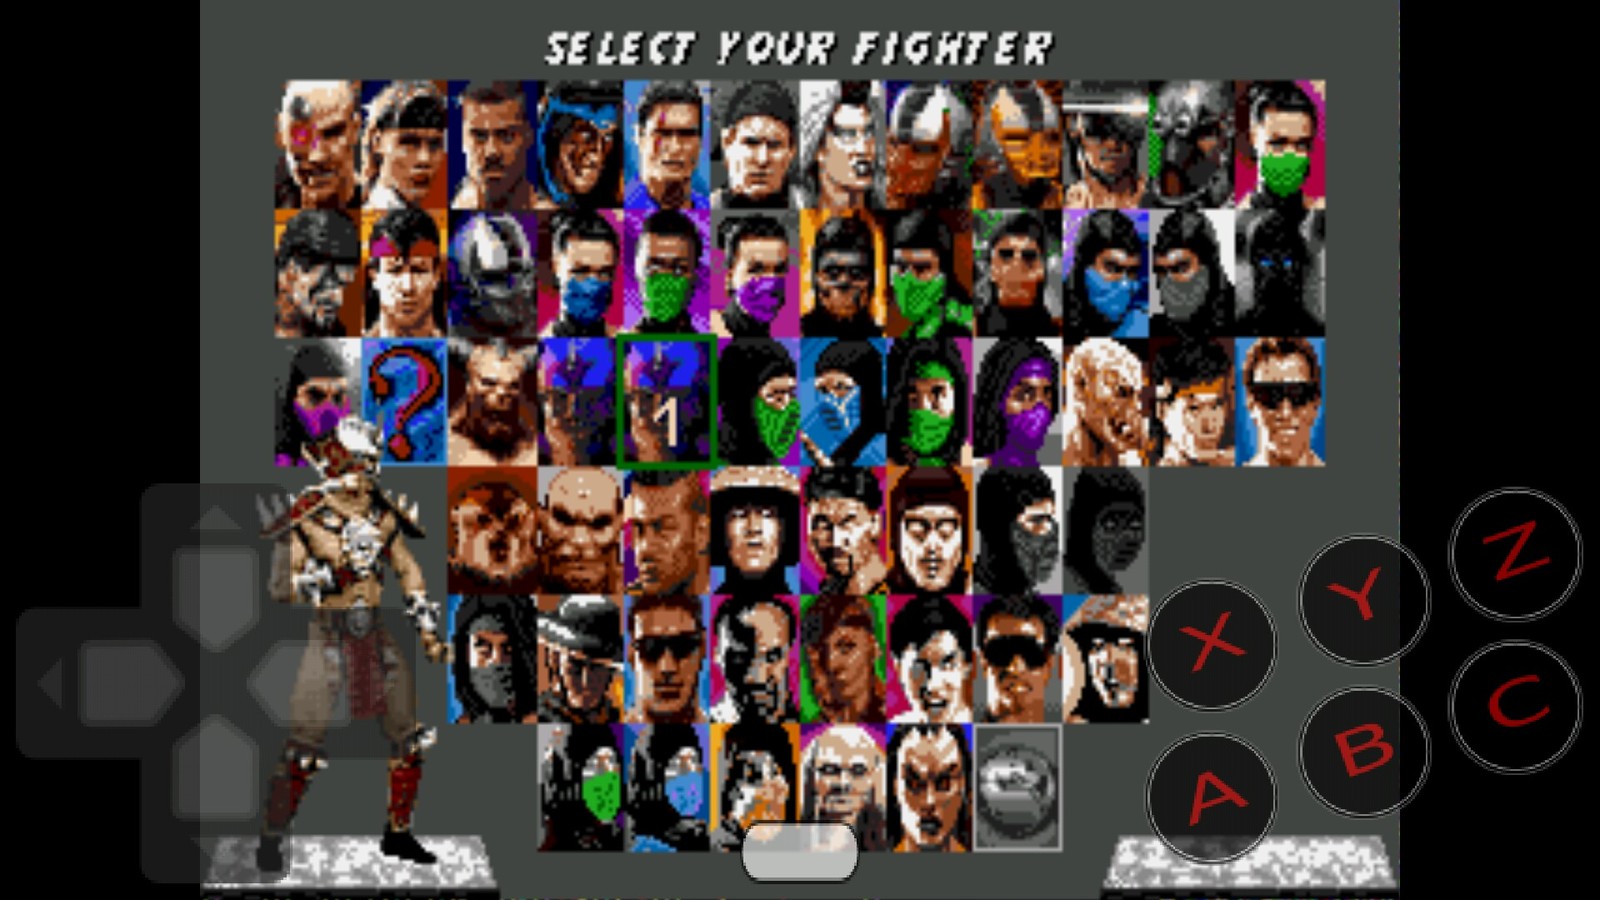 Мортал комбат 3 трилогия. Mortal Kombat Trilogy Sega персонажи. Ultimate Mortal Kombat 3. Mortal Kombat Trilogy бойцы. Мортал комбат 3 ультиматум сега.